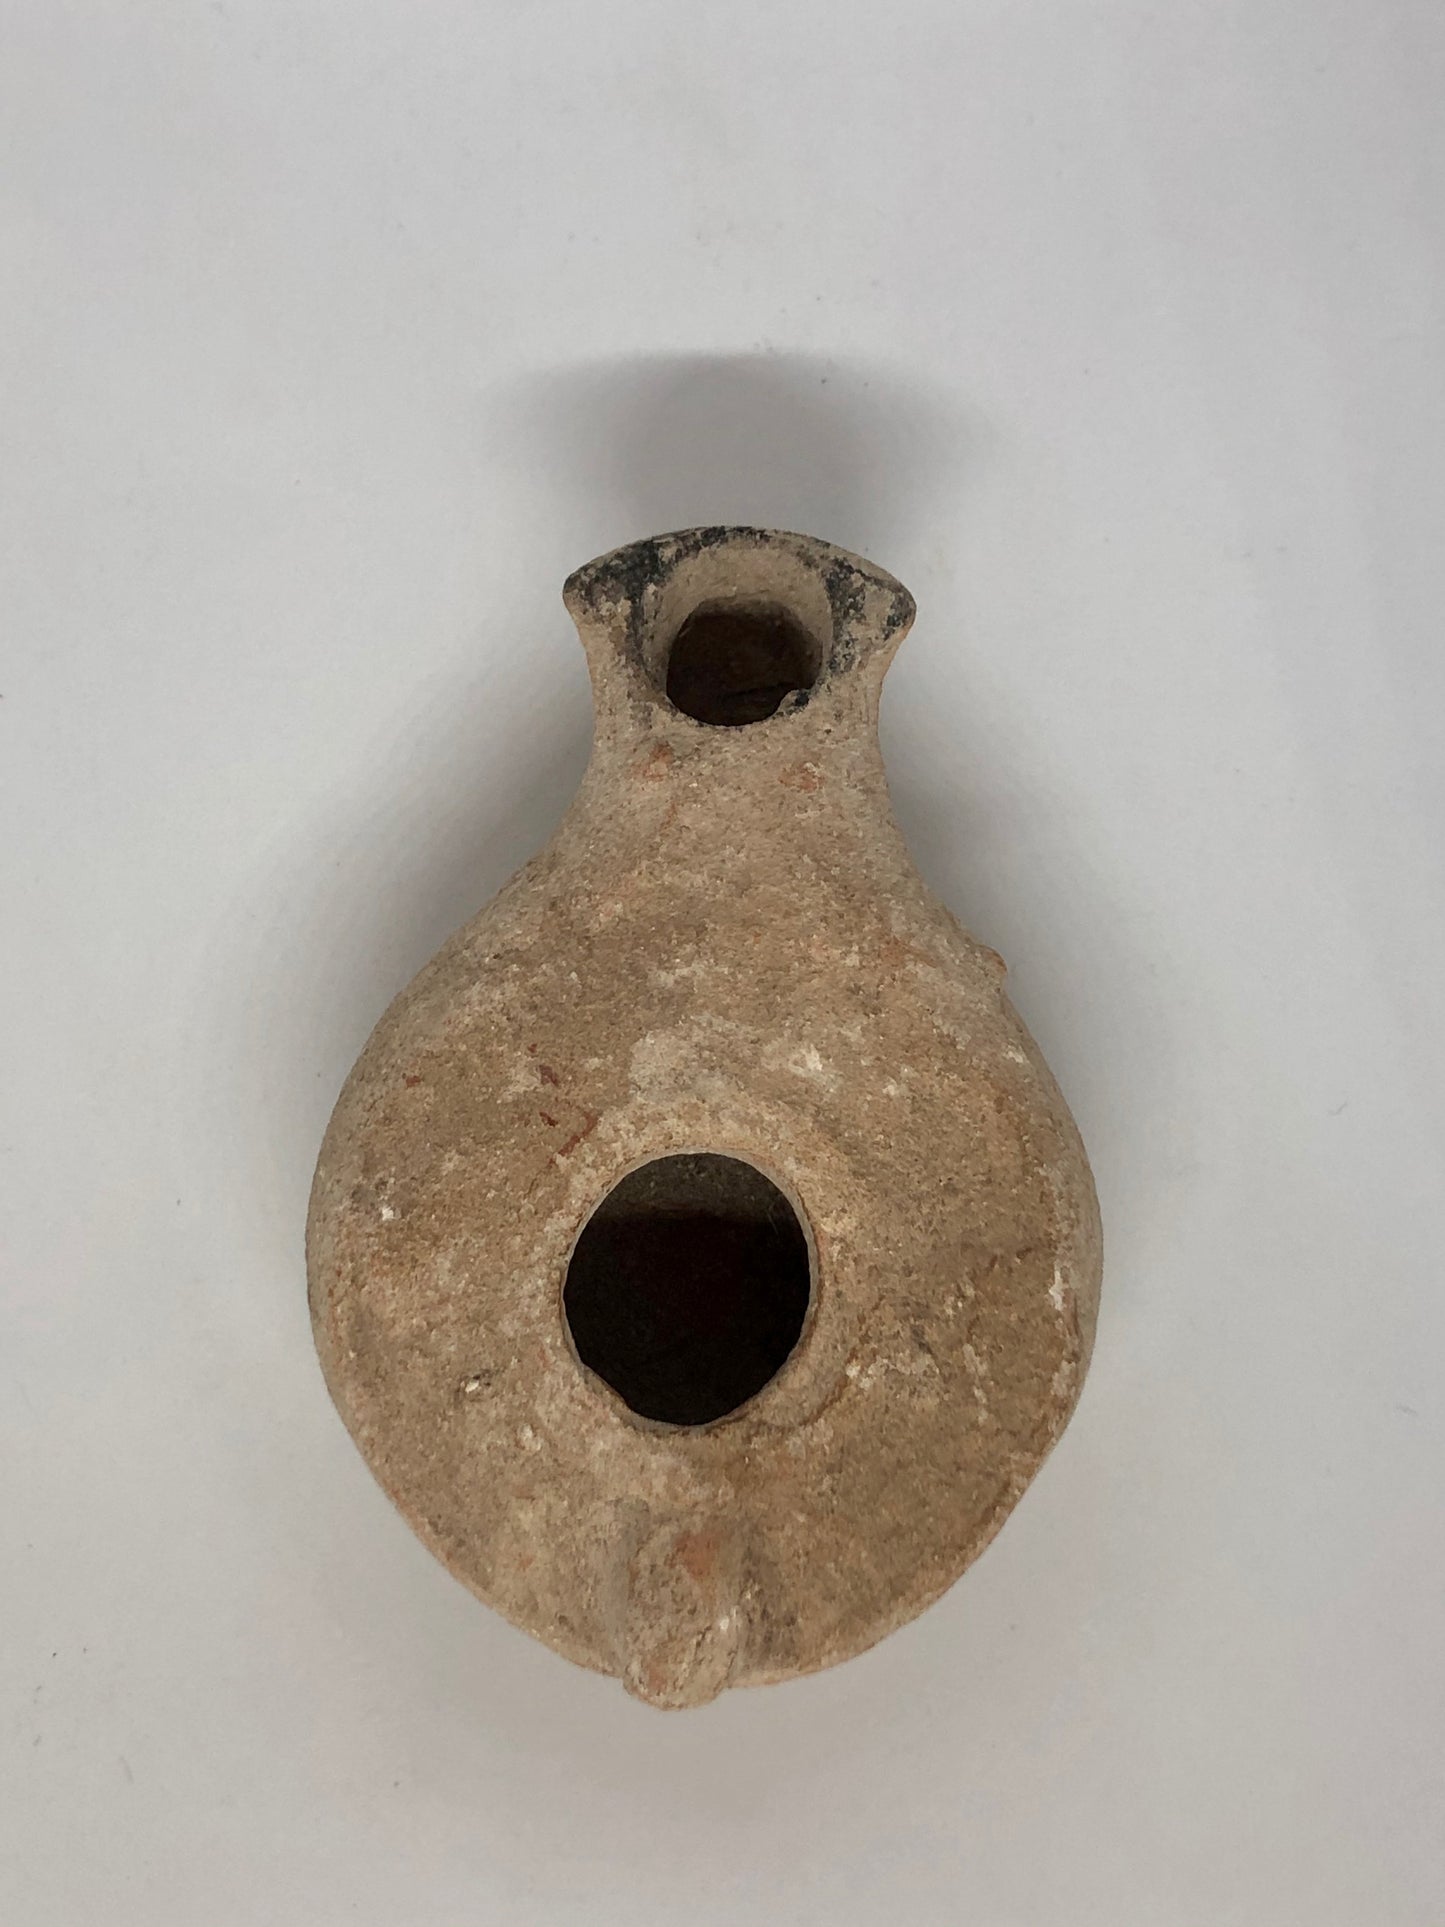 Herodium Oil lamp. 23 B.C.E